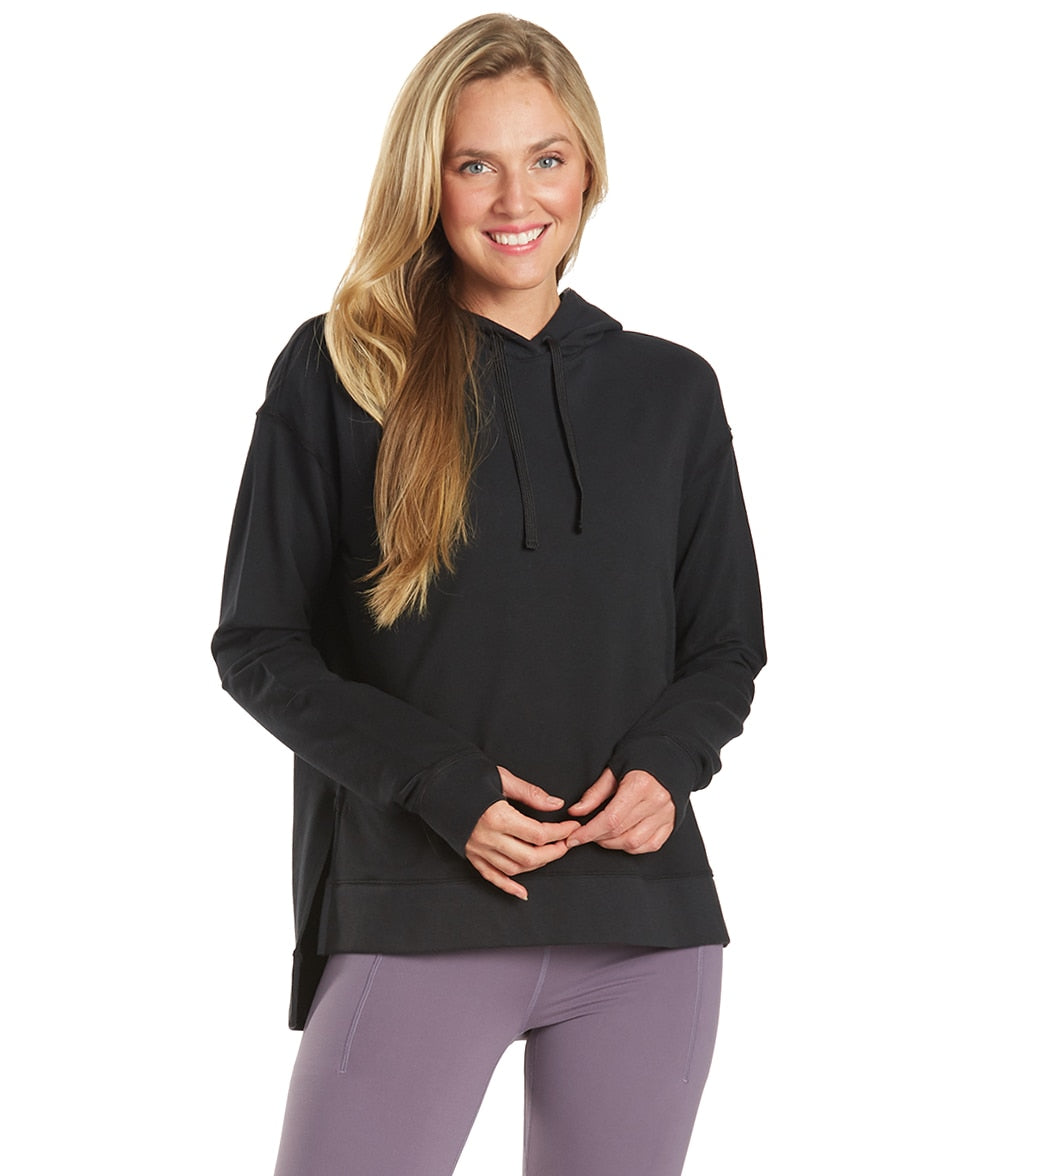 Women Yoga Apparel Jackets - Buy Women Yoga Apparel Jackets online